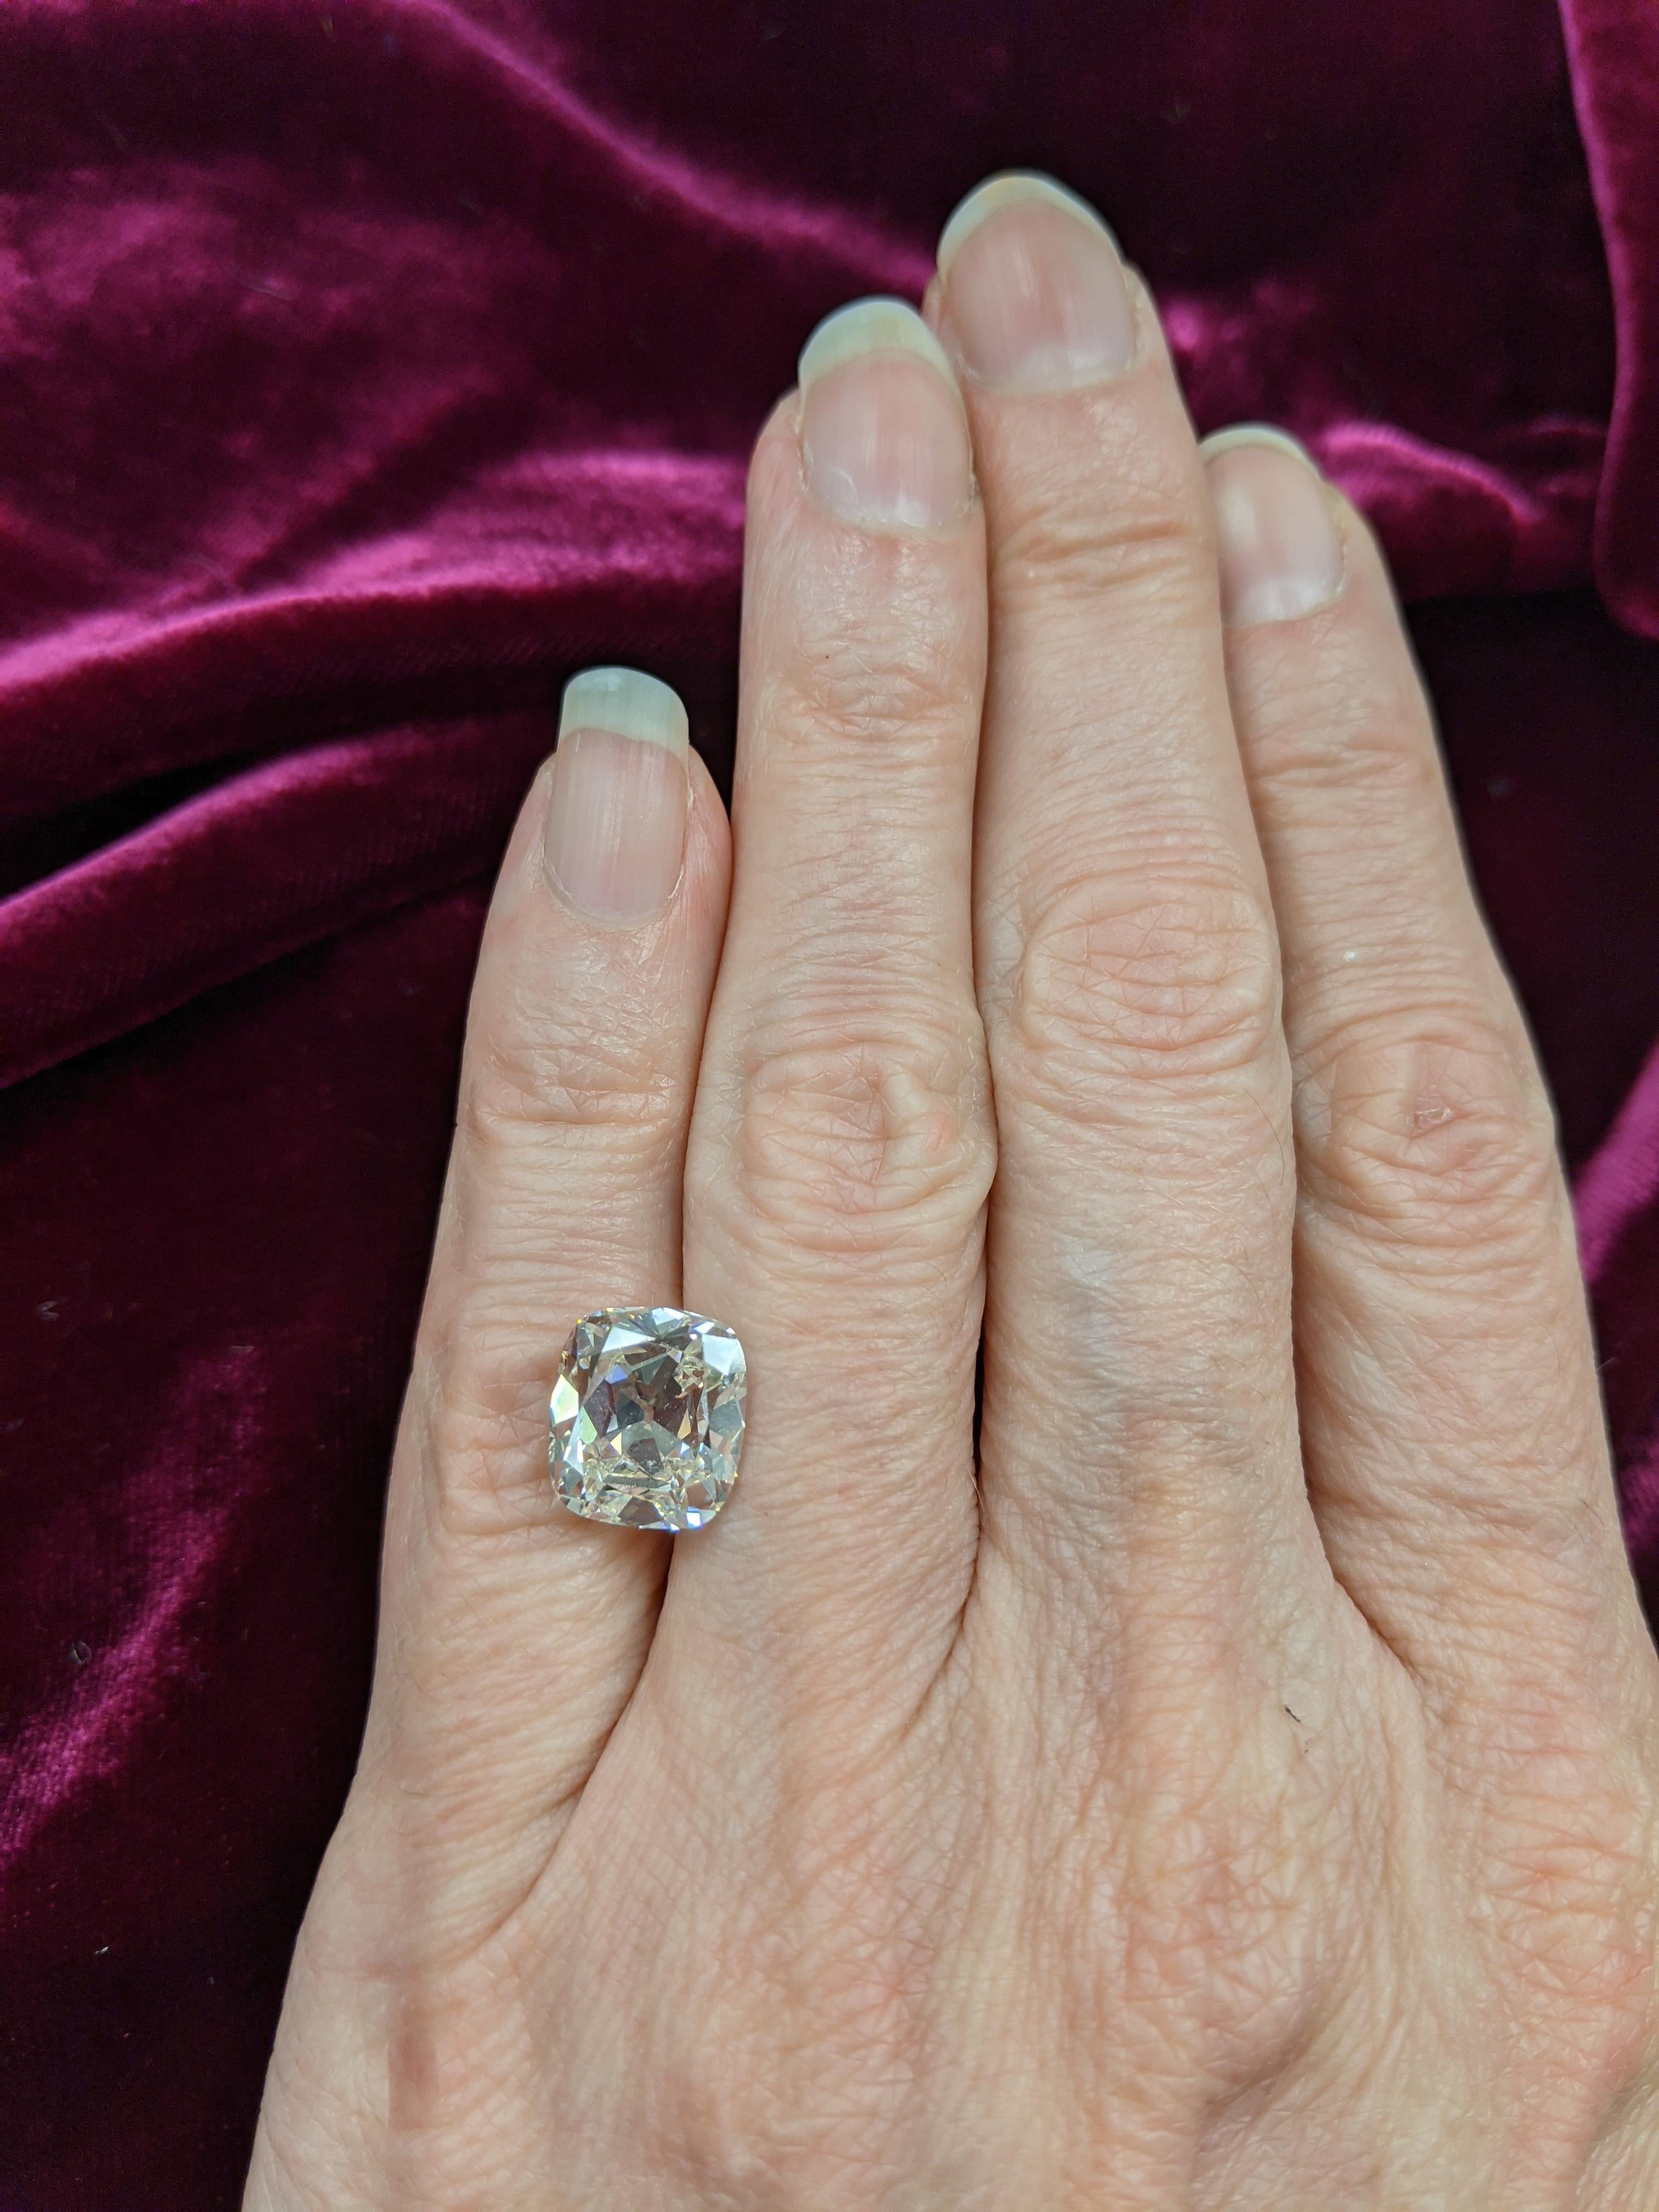 5 carat vintage diamond ring